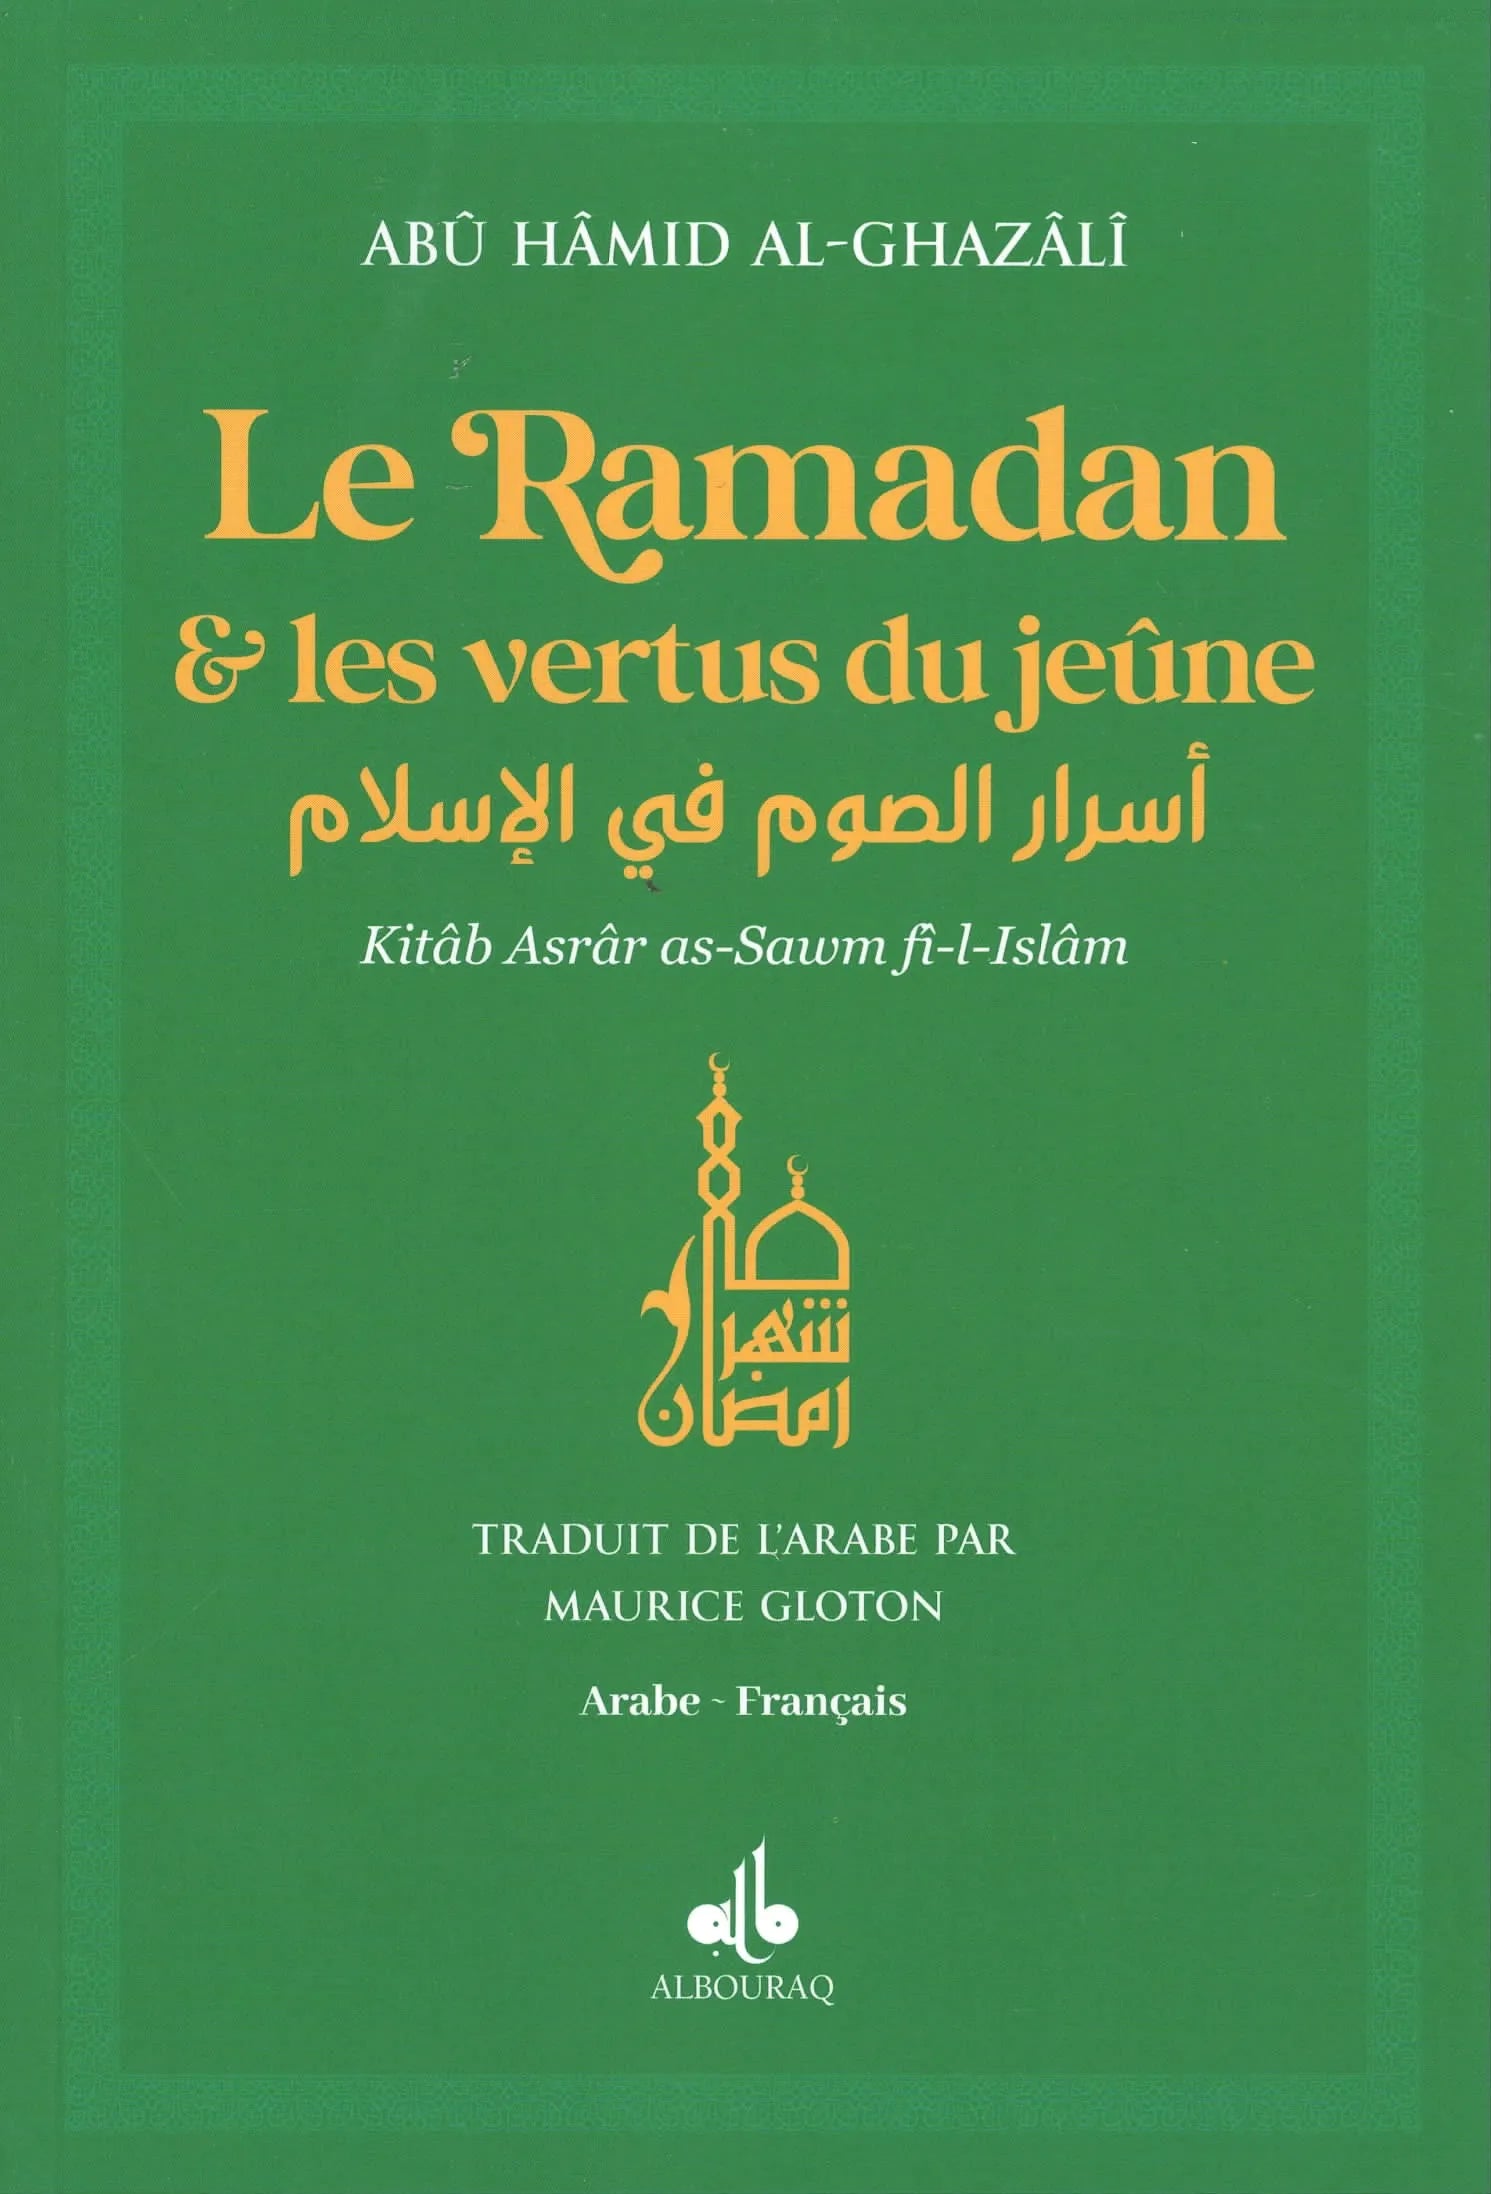 Le Ramadan & les vertus du jeûne par Abu Hamid Al-Ghazali Vert Albouraq